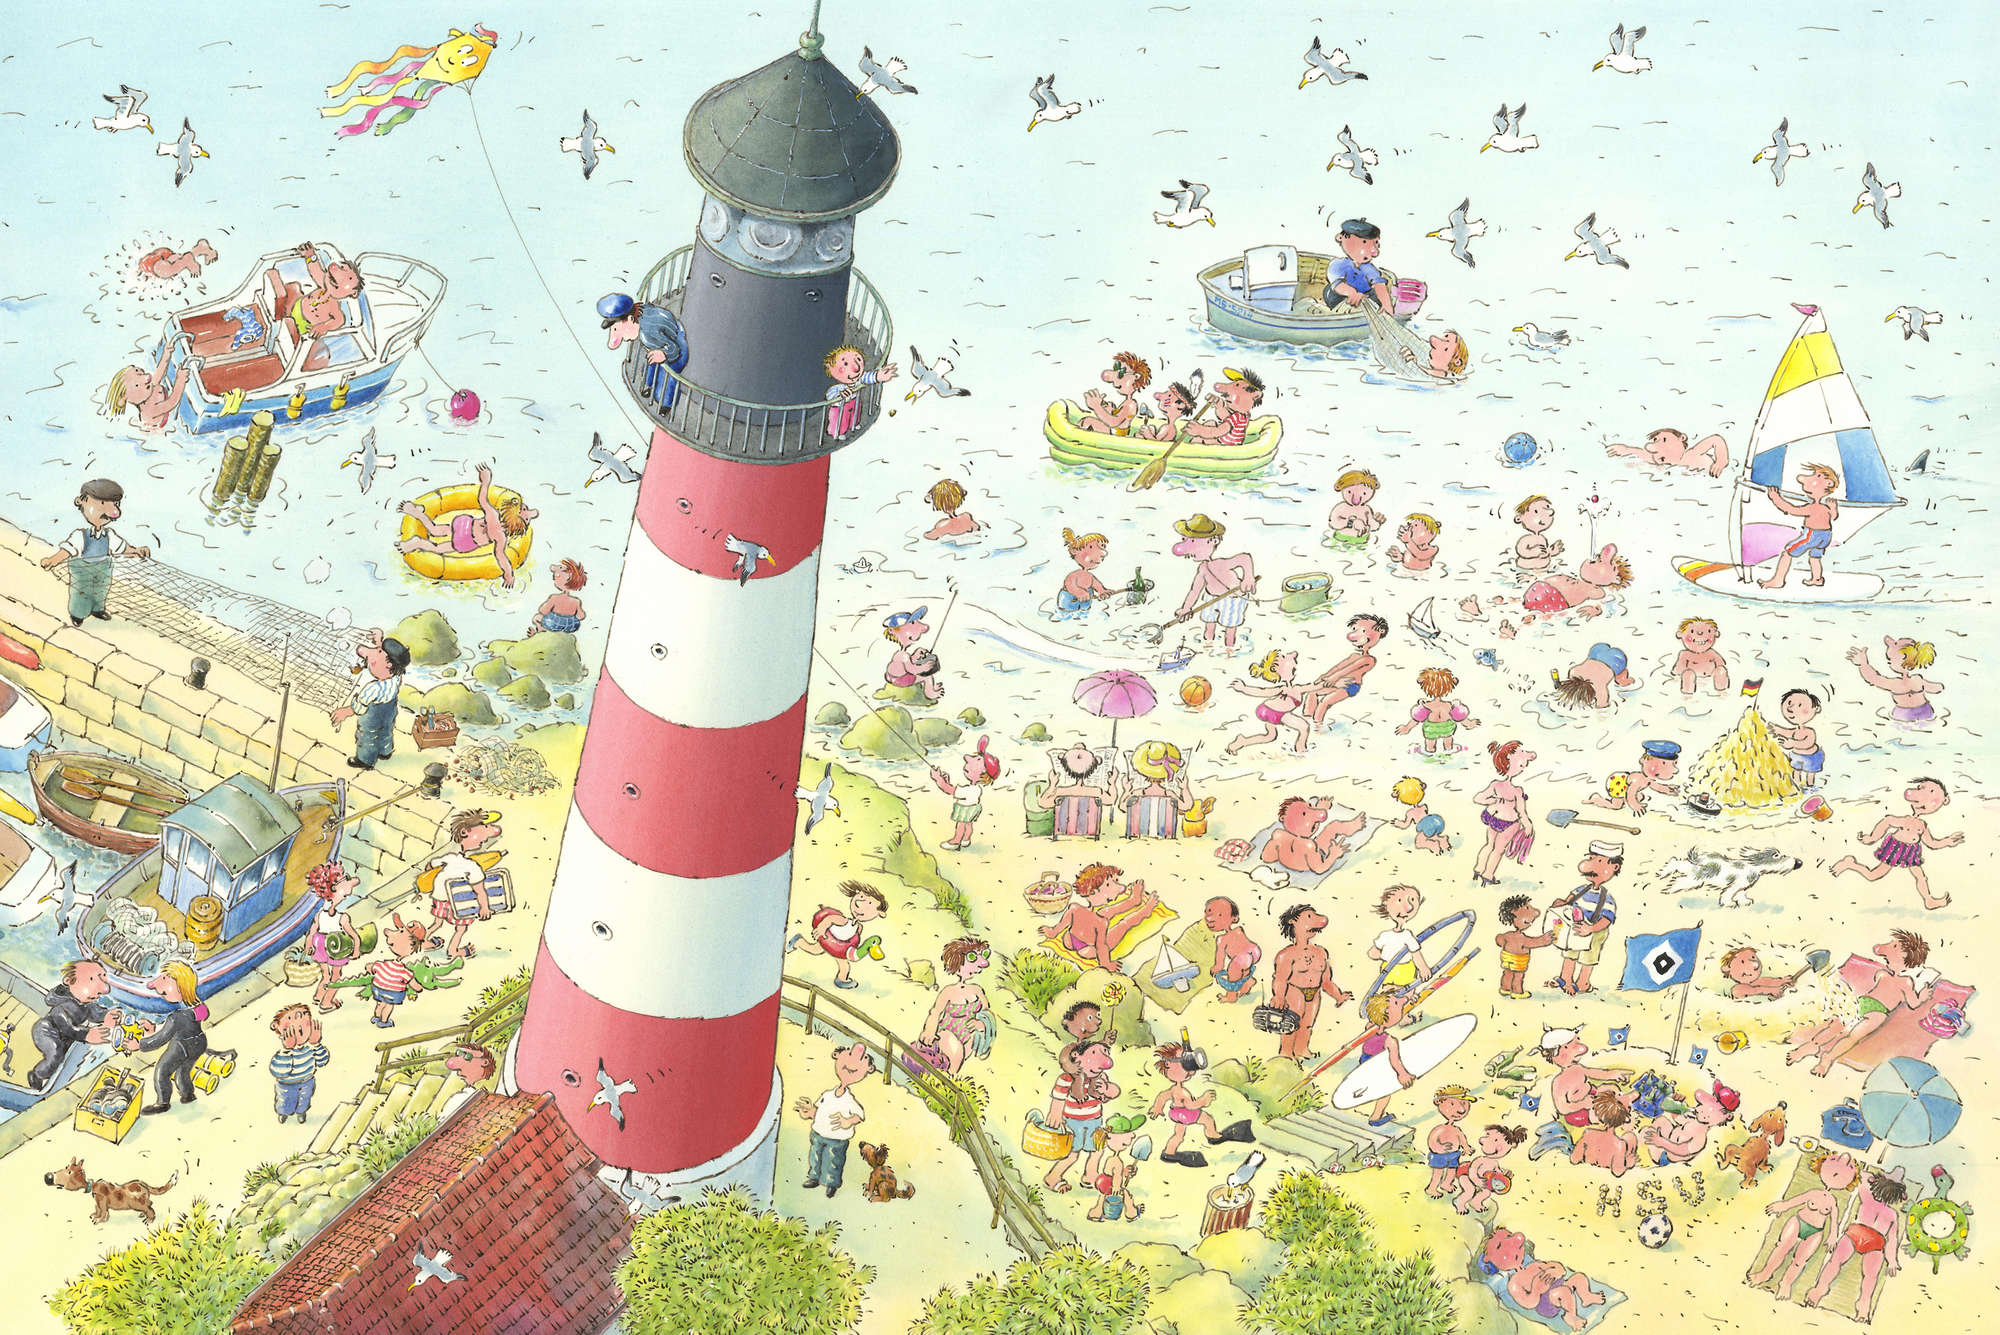             Mural infantil de playa con bañistas y faro sobre vellón liso nacarado
        